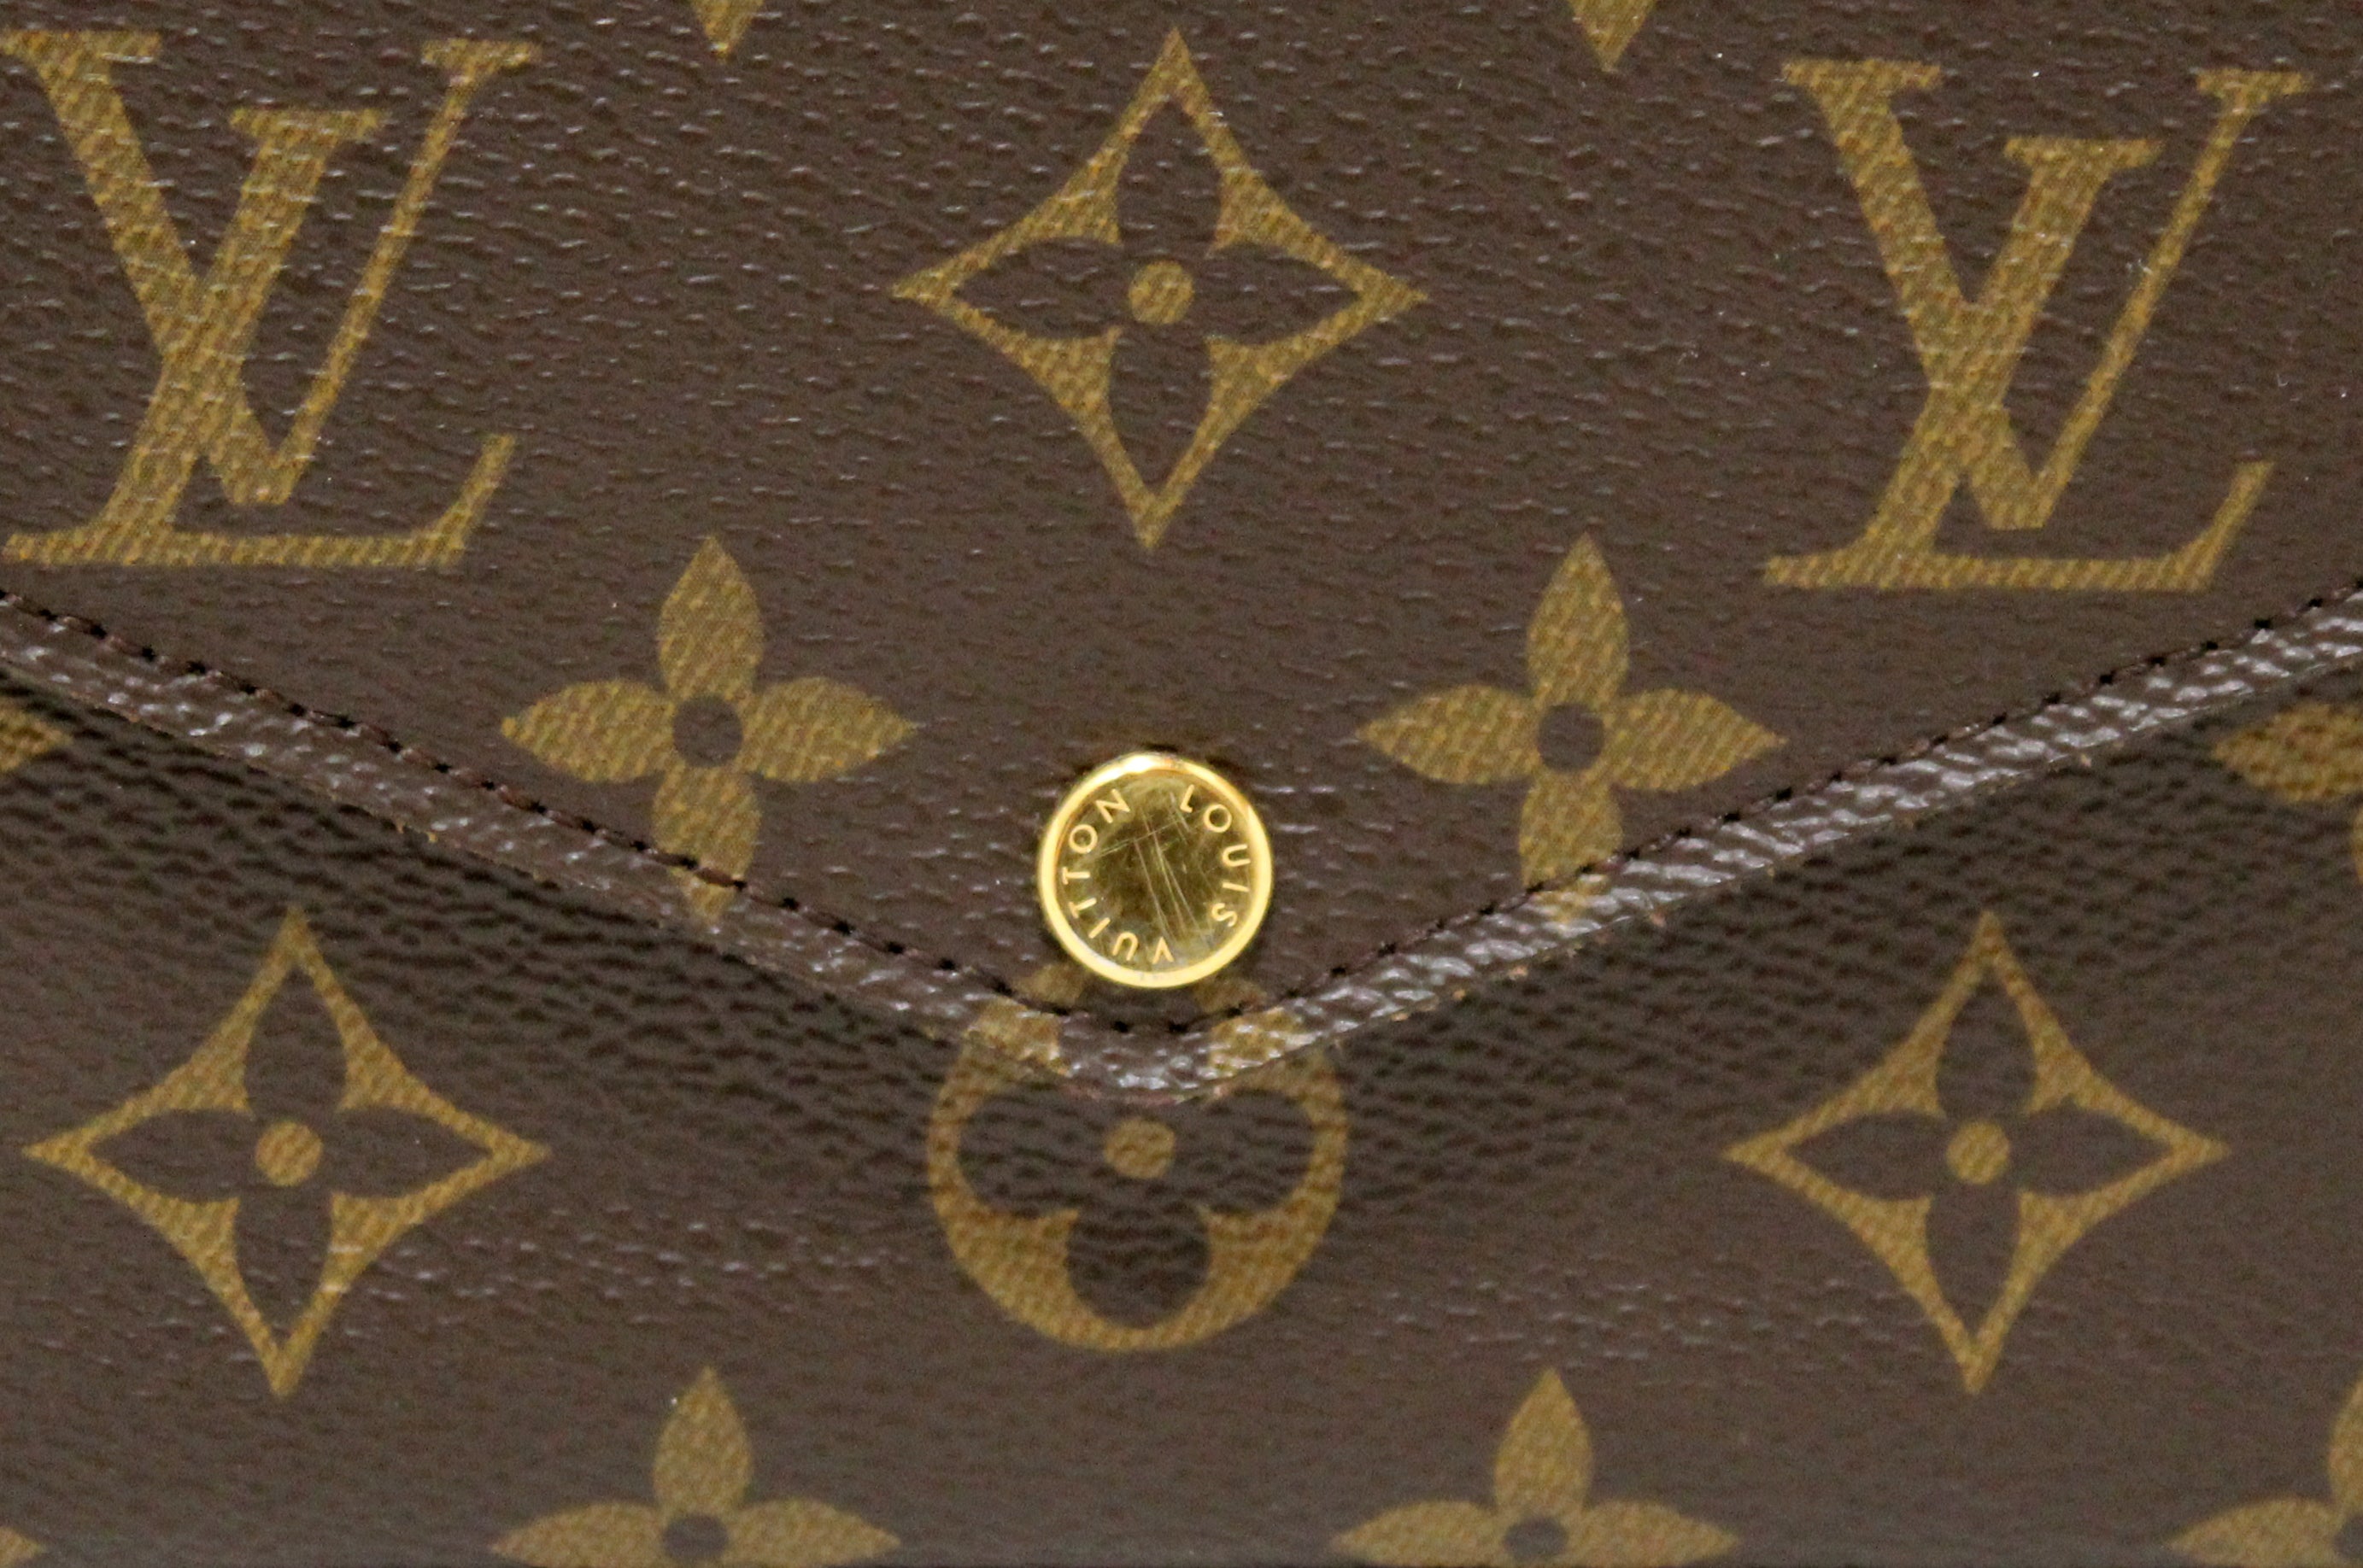 Louis Vuitton Pochette Felicie Monogram Fuchsia Lining for Women